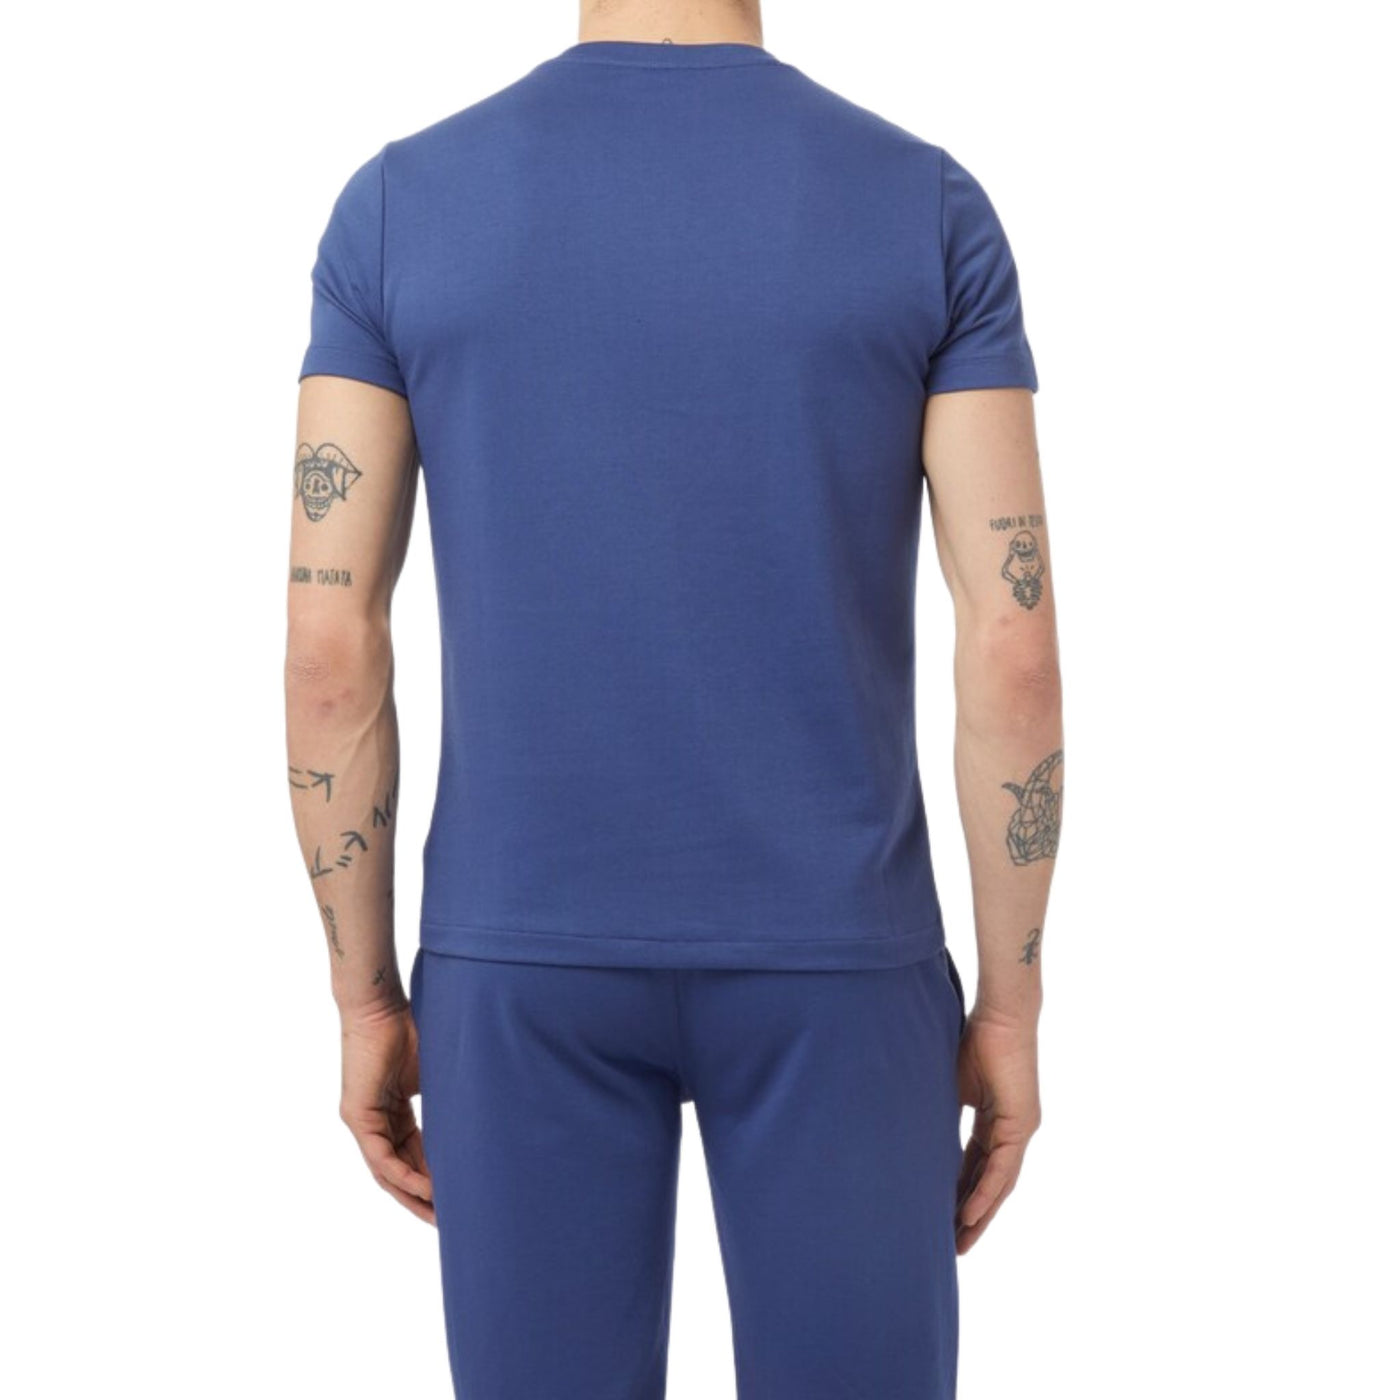 T-shirt uomo blu firmata Polo Ralph Lauren su modello vista retro